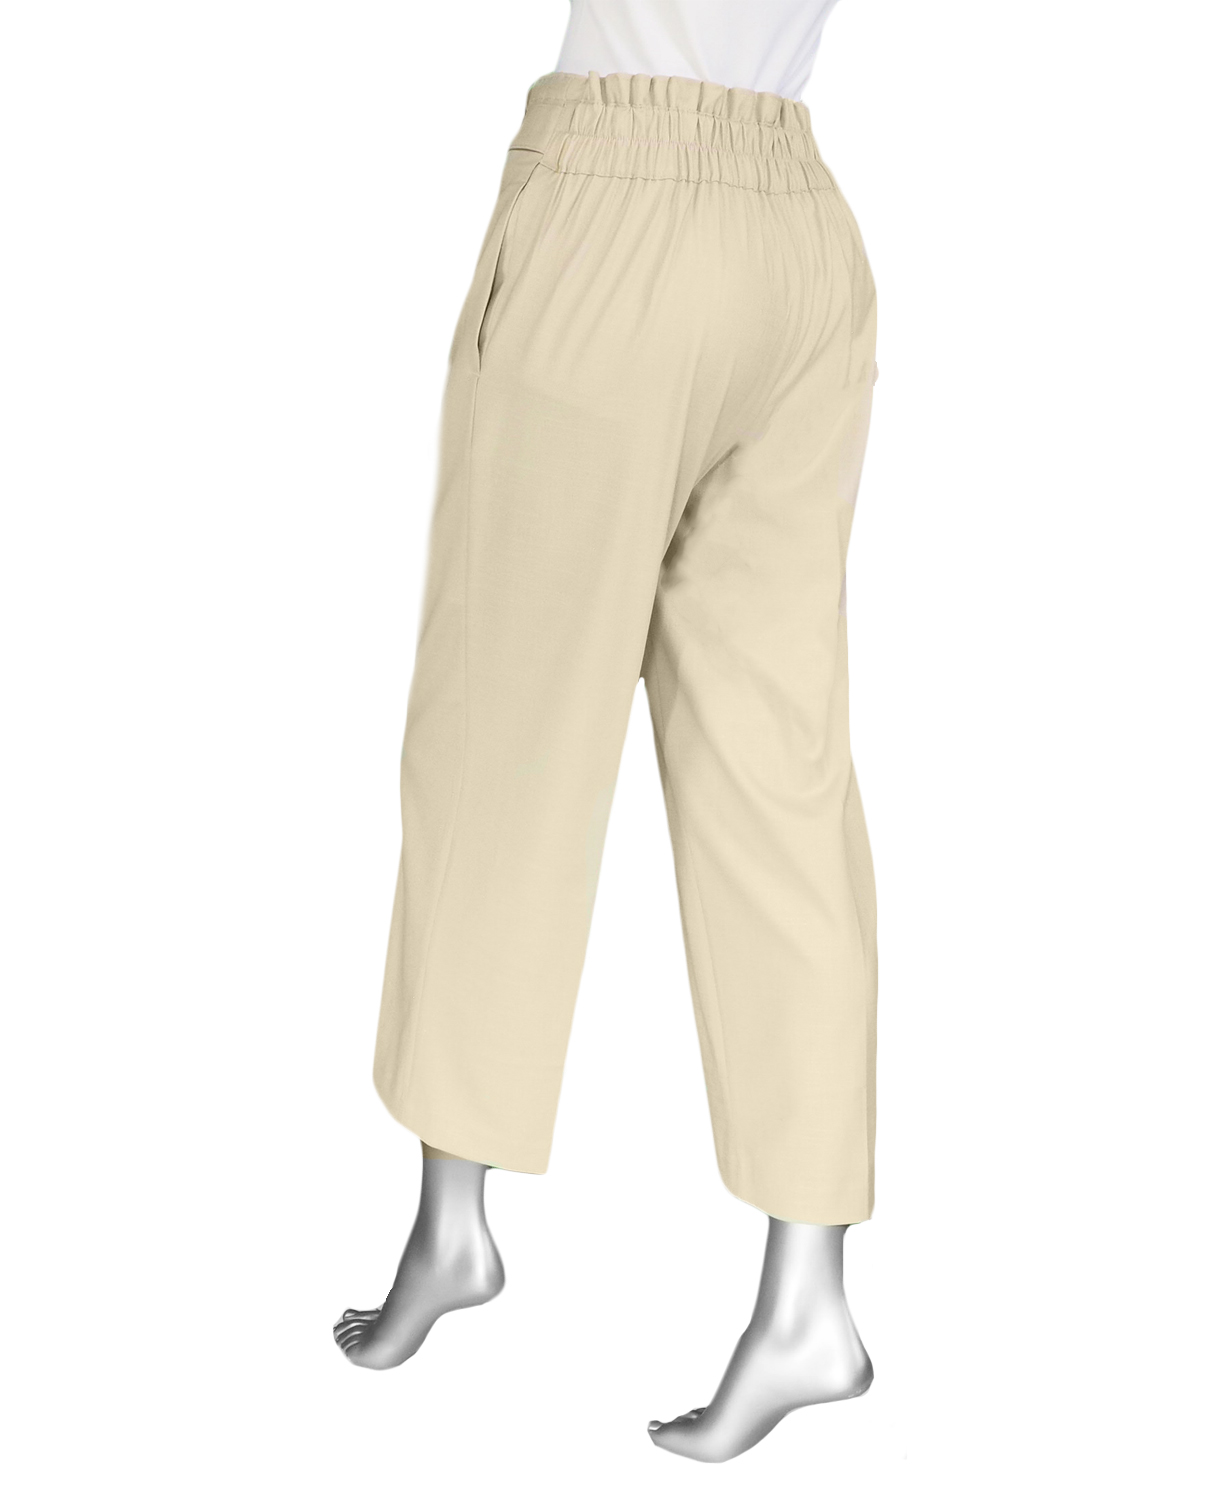 Chic Khaki Pants - Paperbag Waist Pants - Cropped Pants - Lulus